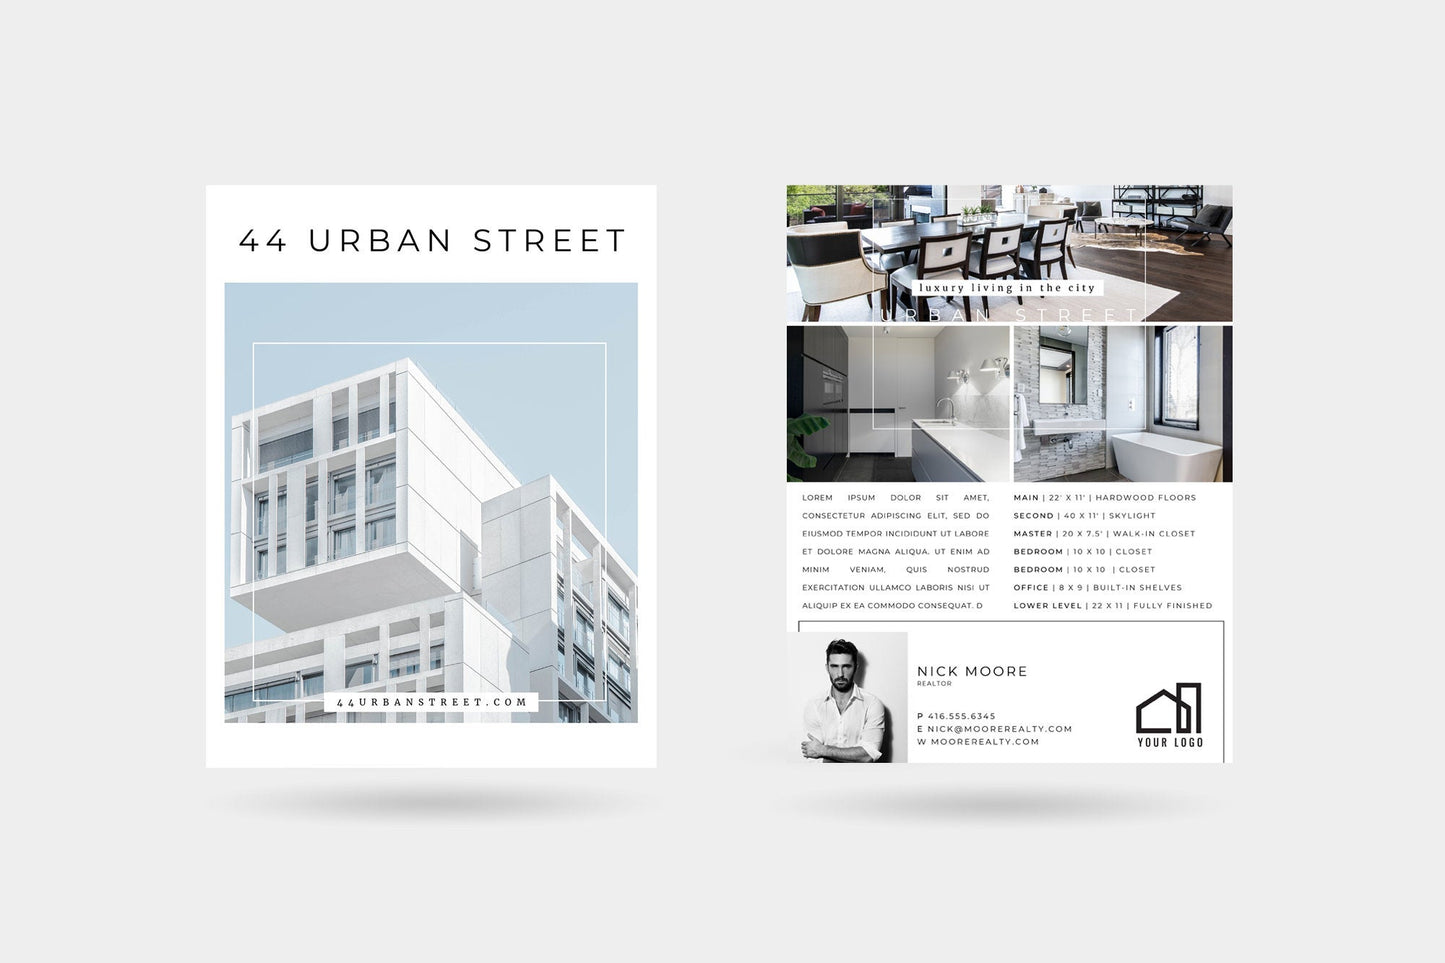 "The Urban" Property Sheet